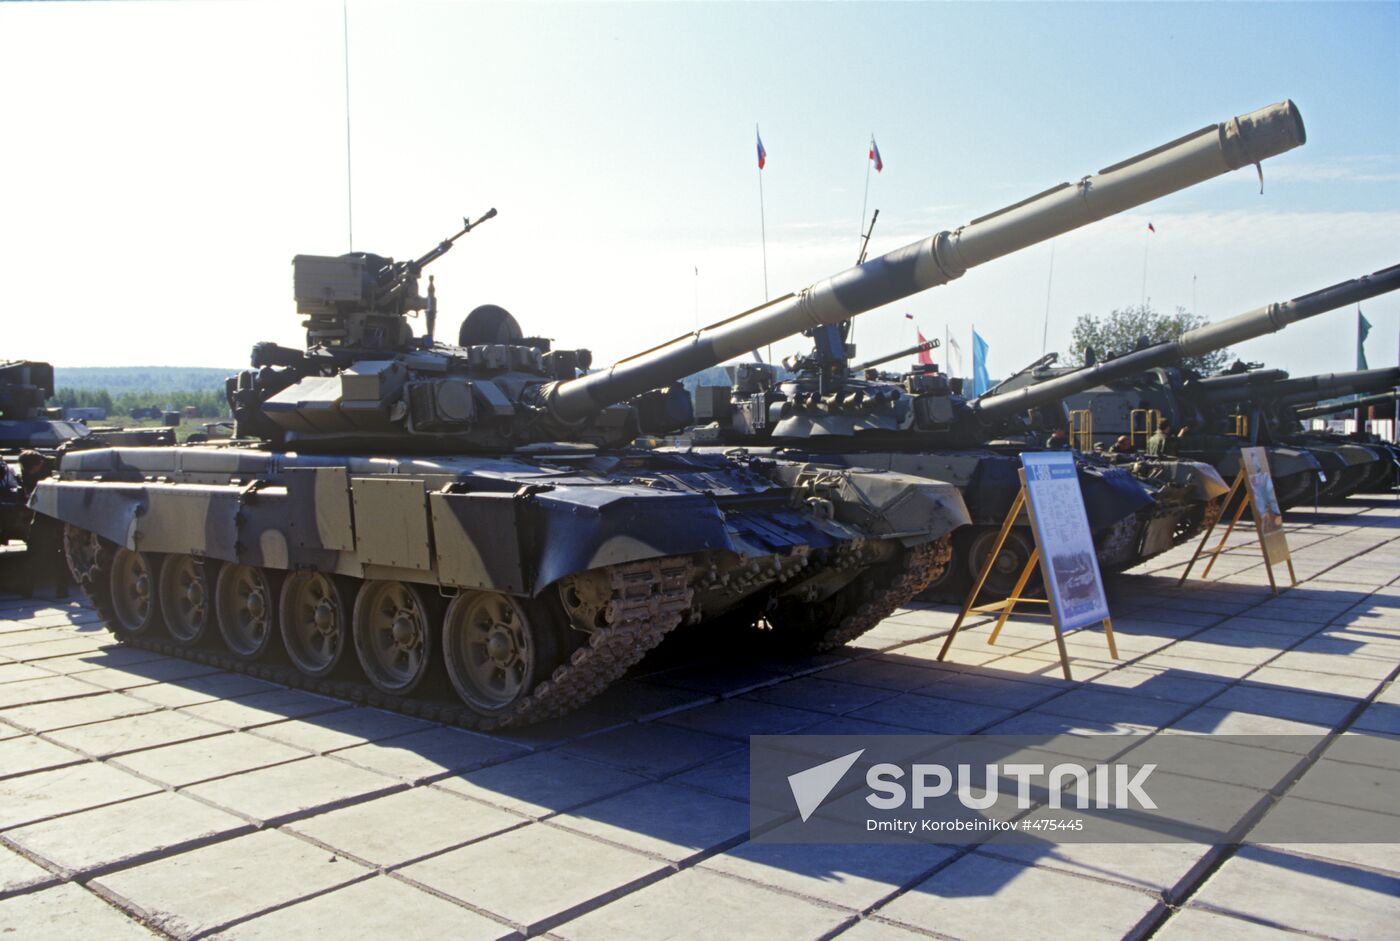 T-90S main battle tank